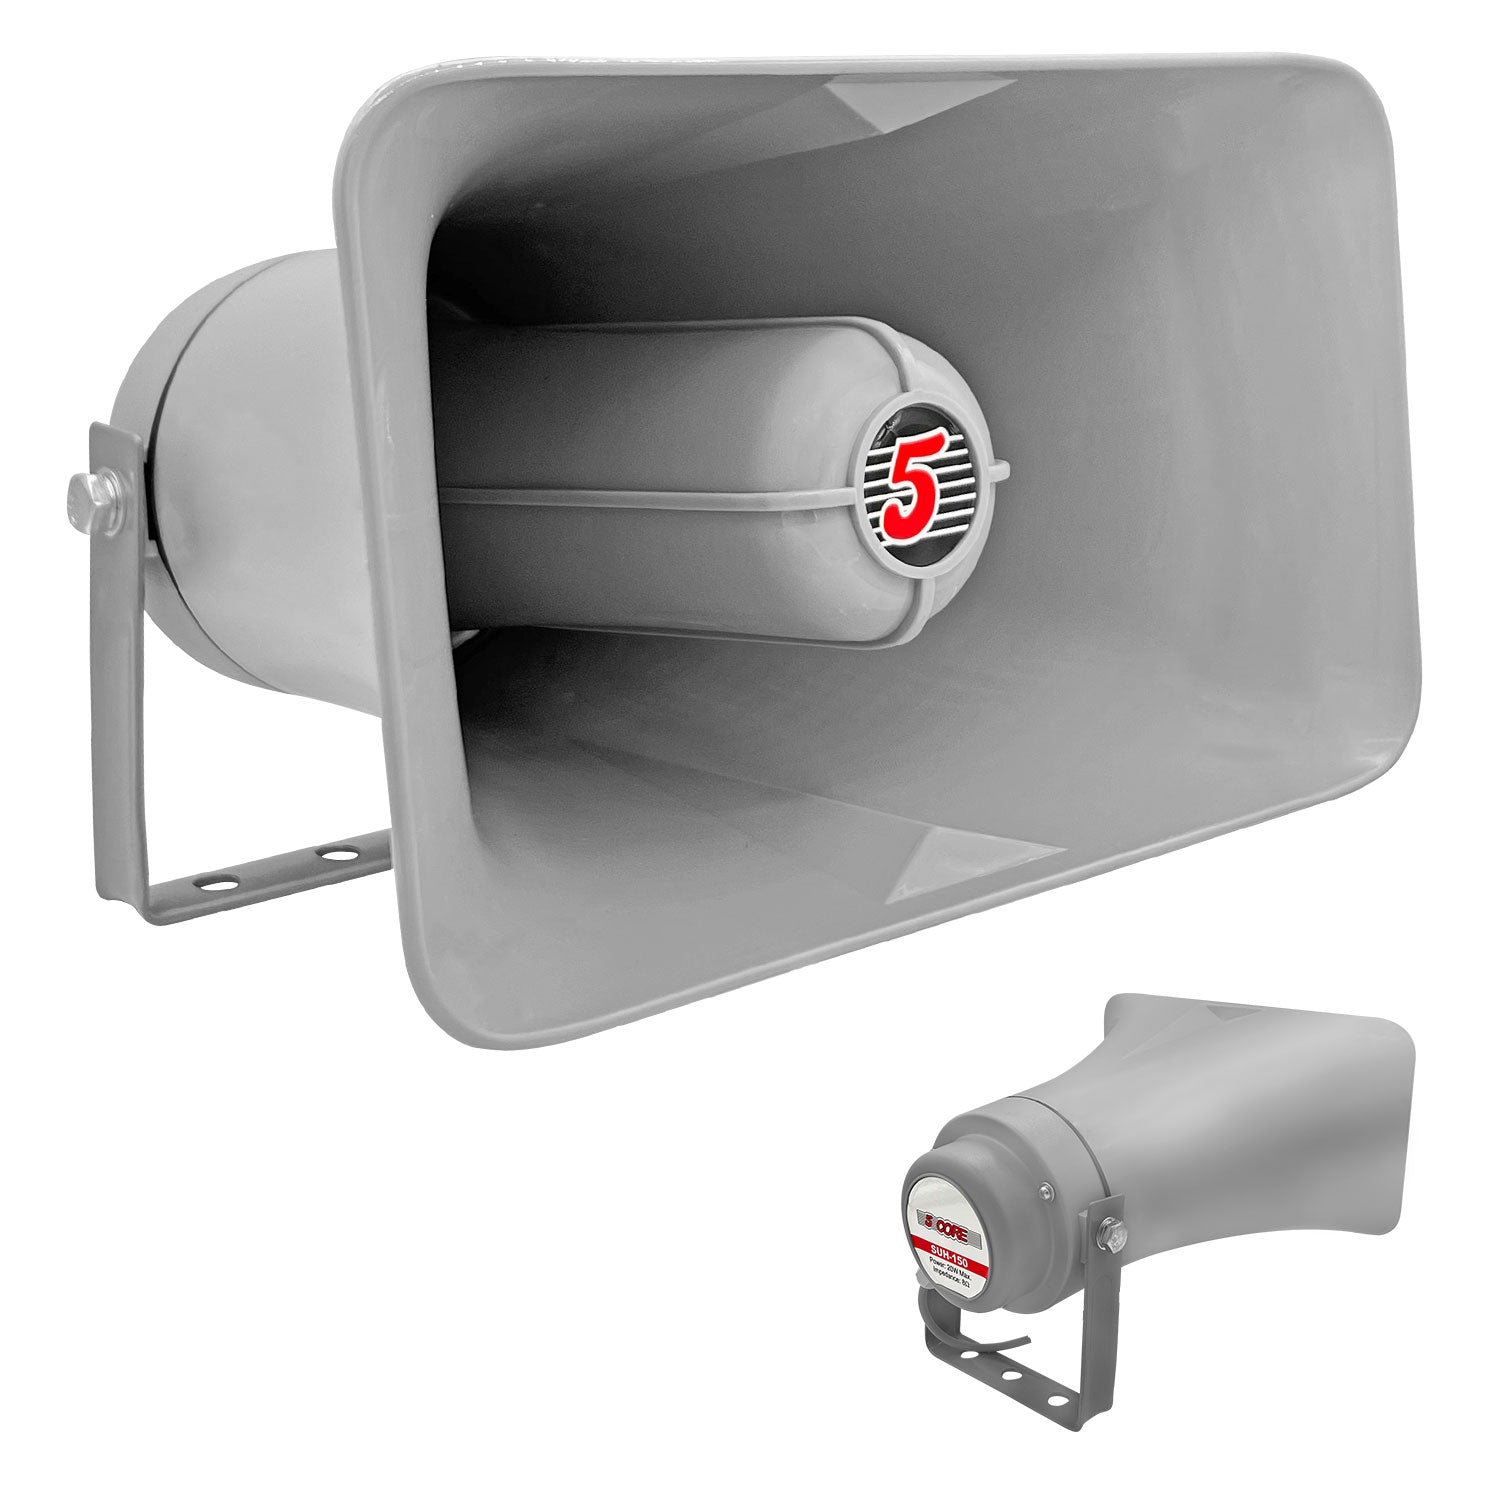 5 Core PA Horn Speaker • Outdoor 6" x 10" Siren Loudspeaker • 200W PMPO • Loud Driver Horn 1/2 Pc